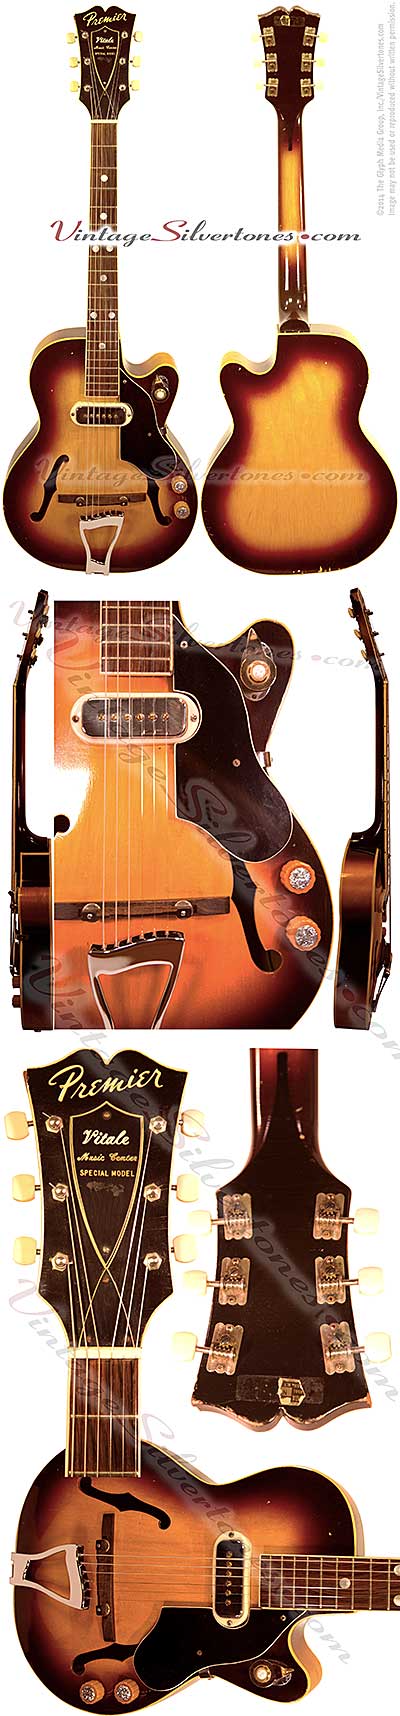 Multivox Premier Bantam electric guitar 1pu sunburst circa 1962